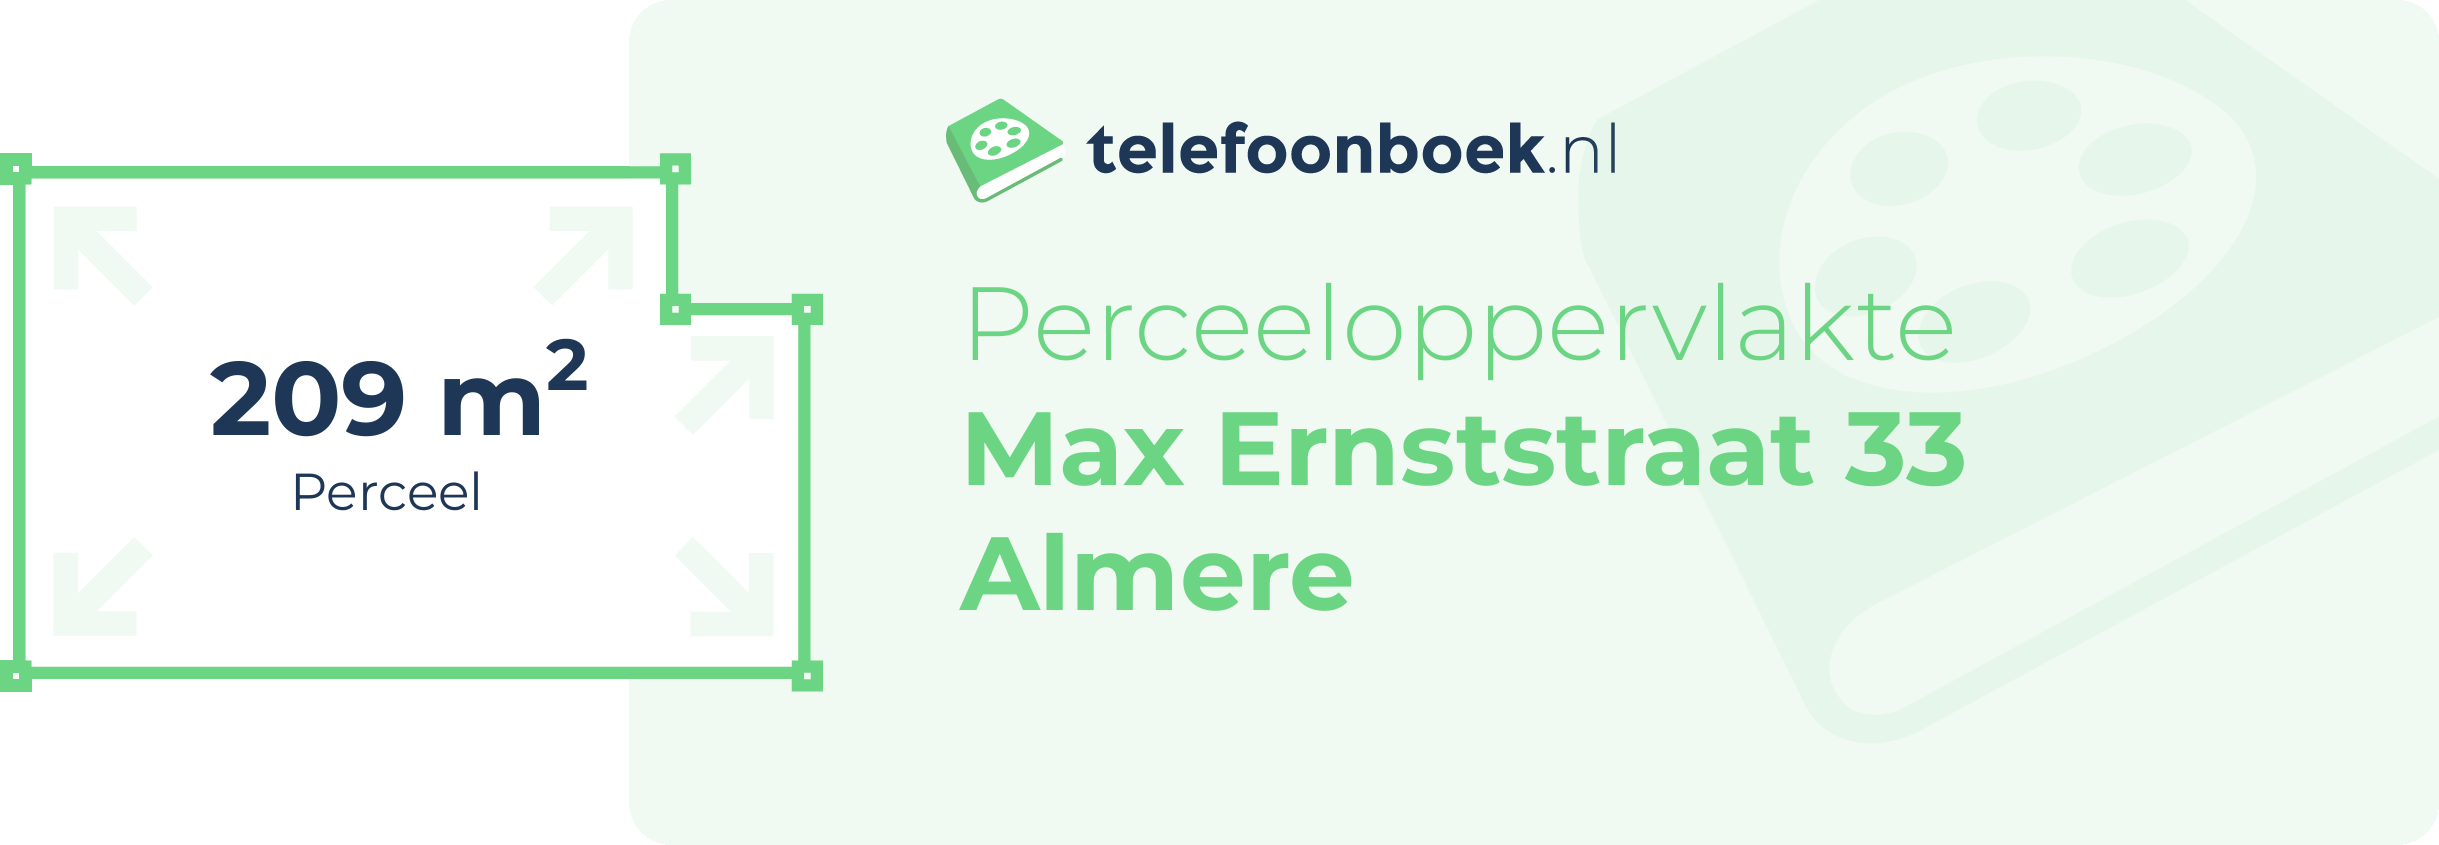 Perceeloppervlakte Max Ernststraat 33 Almere